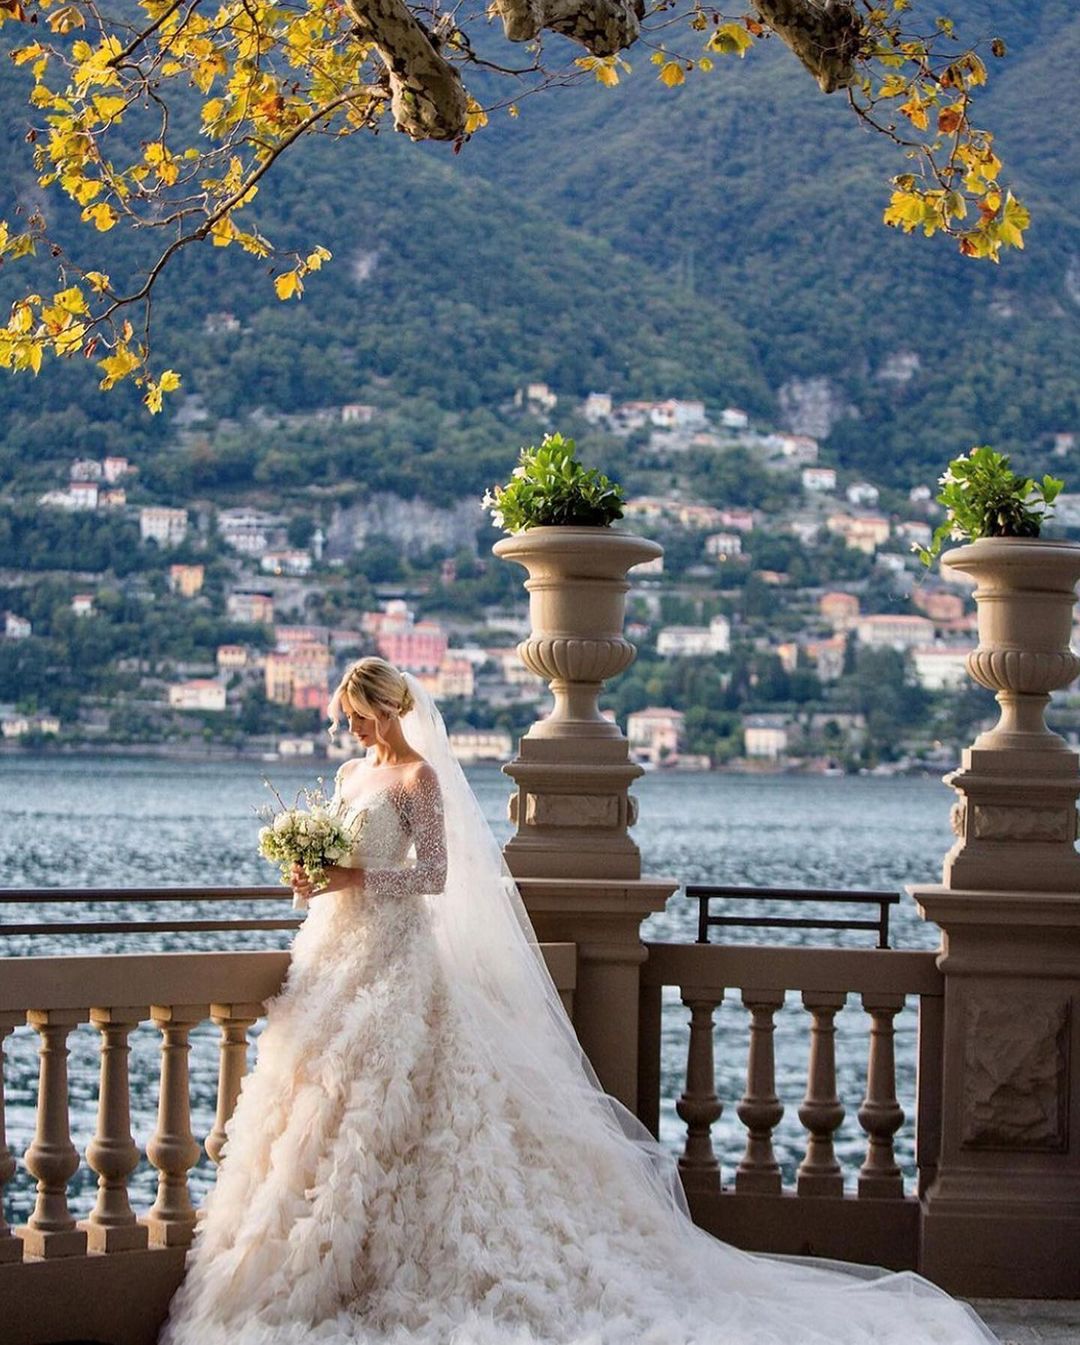 Stunning wedding dress for an Italian destination wedding by couture wedding dress designer Elie Saab.